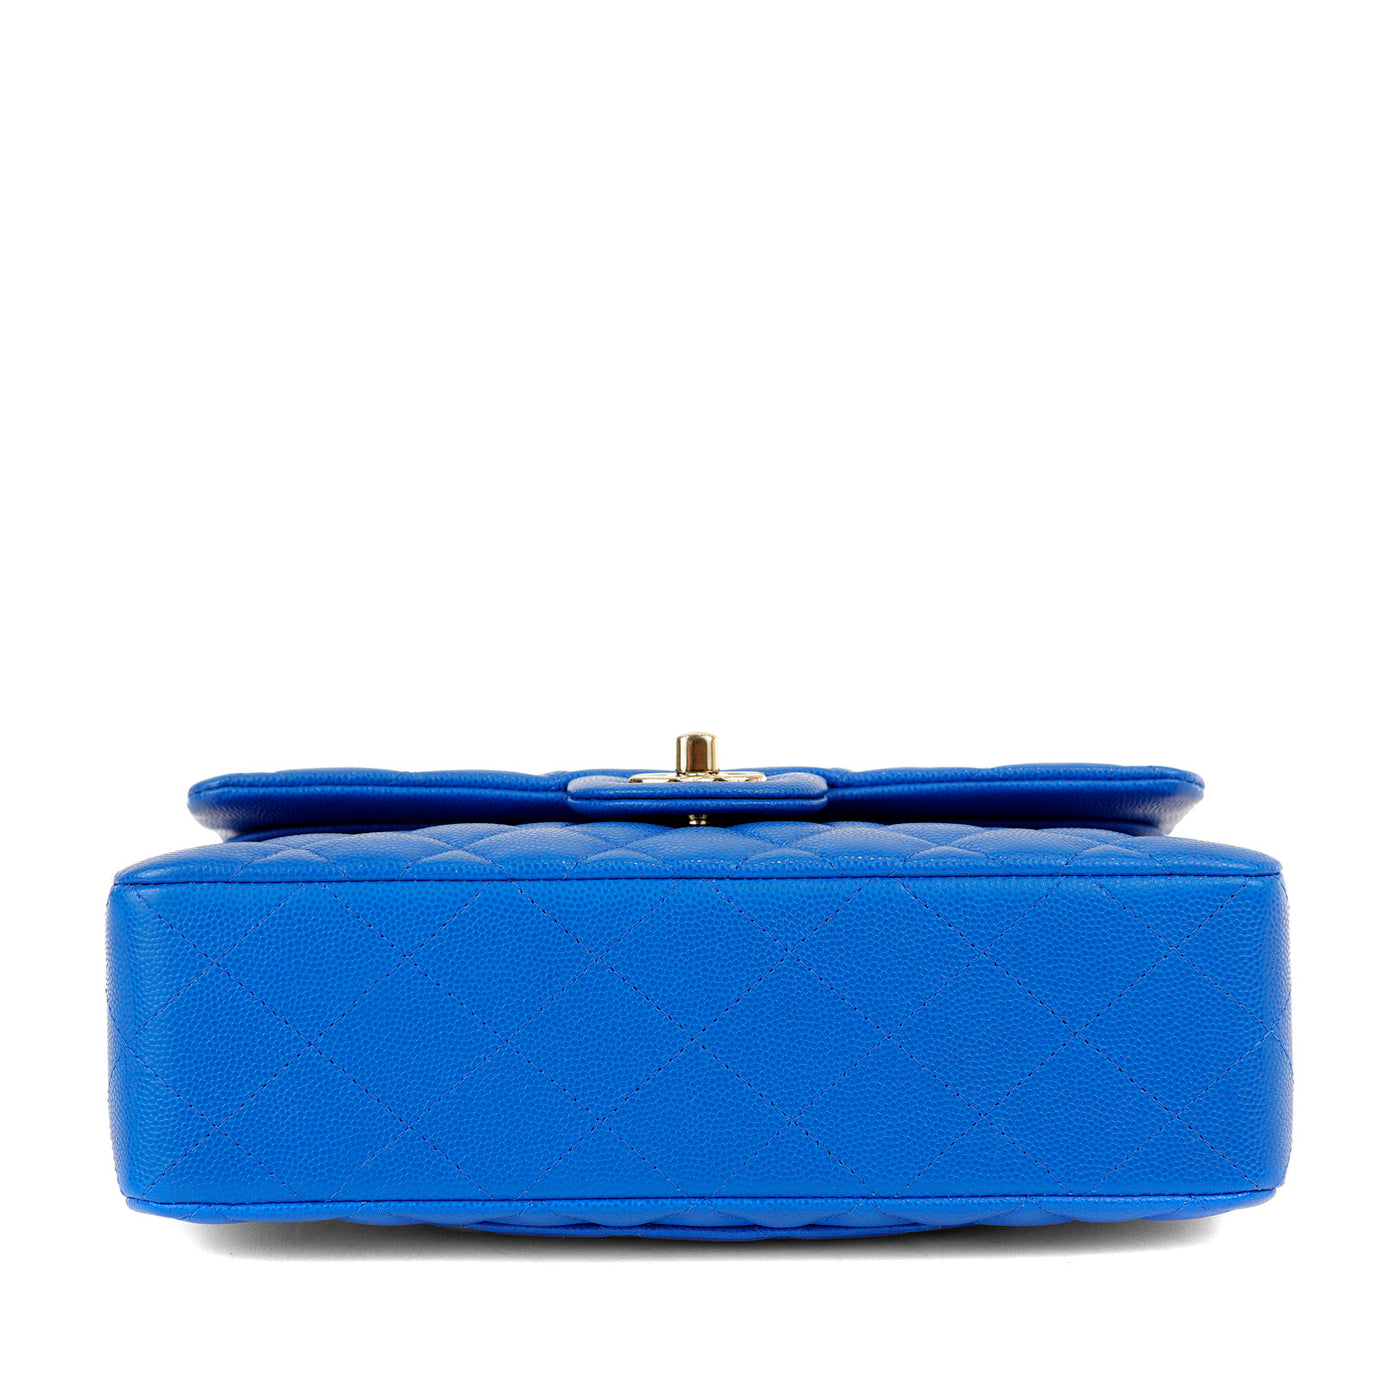 Chanel Electric Blue Caviar Small/ Medium Classic w/ Gold Hardware